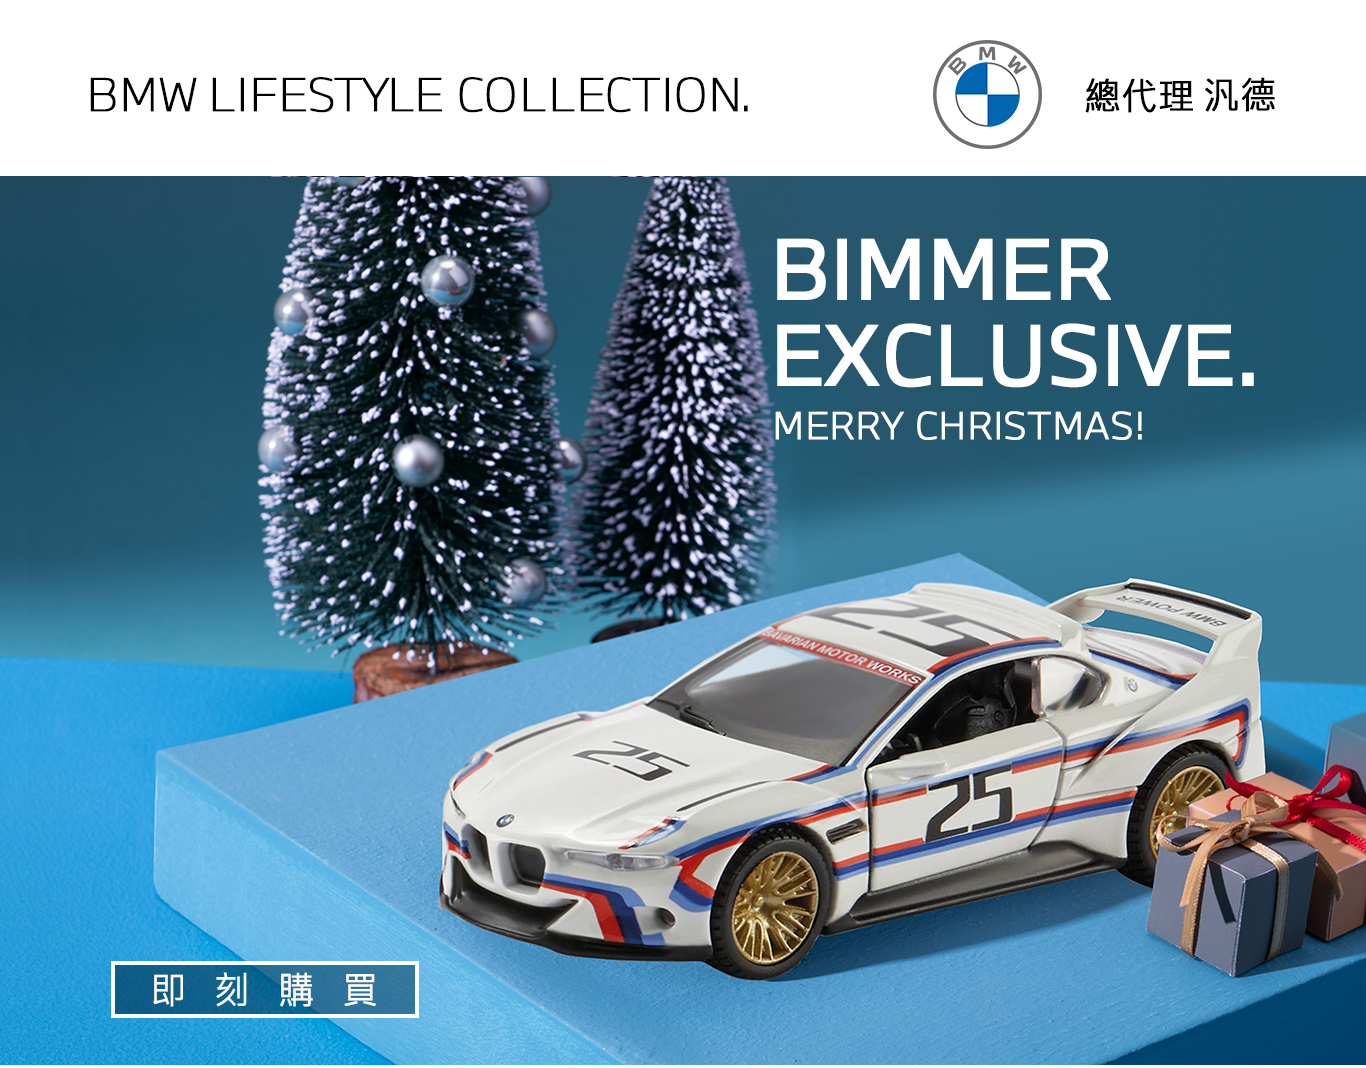 BIMMER EXCLUSIVE.  BMW M迴力車收藏組限時優惠